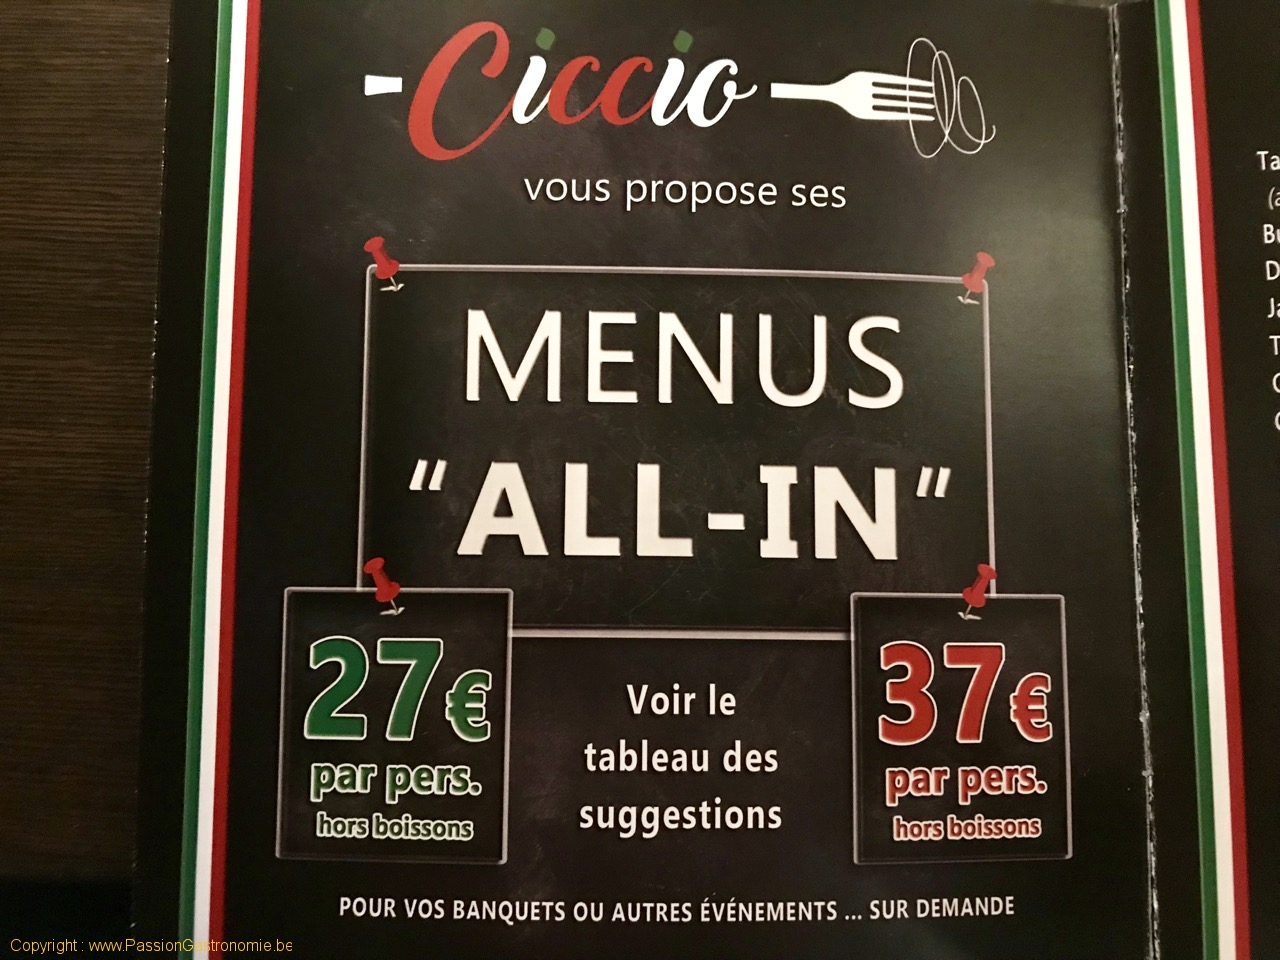 Restaurant Ciccio - Le menu all-in